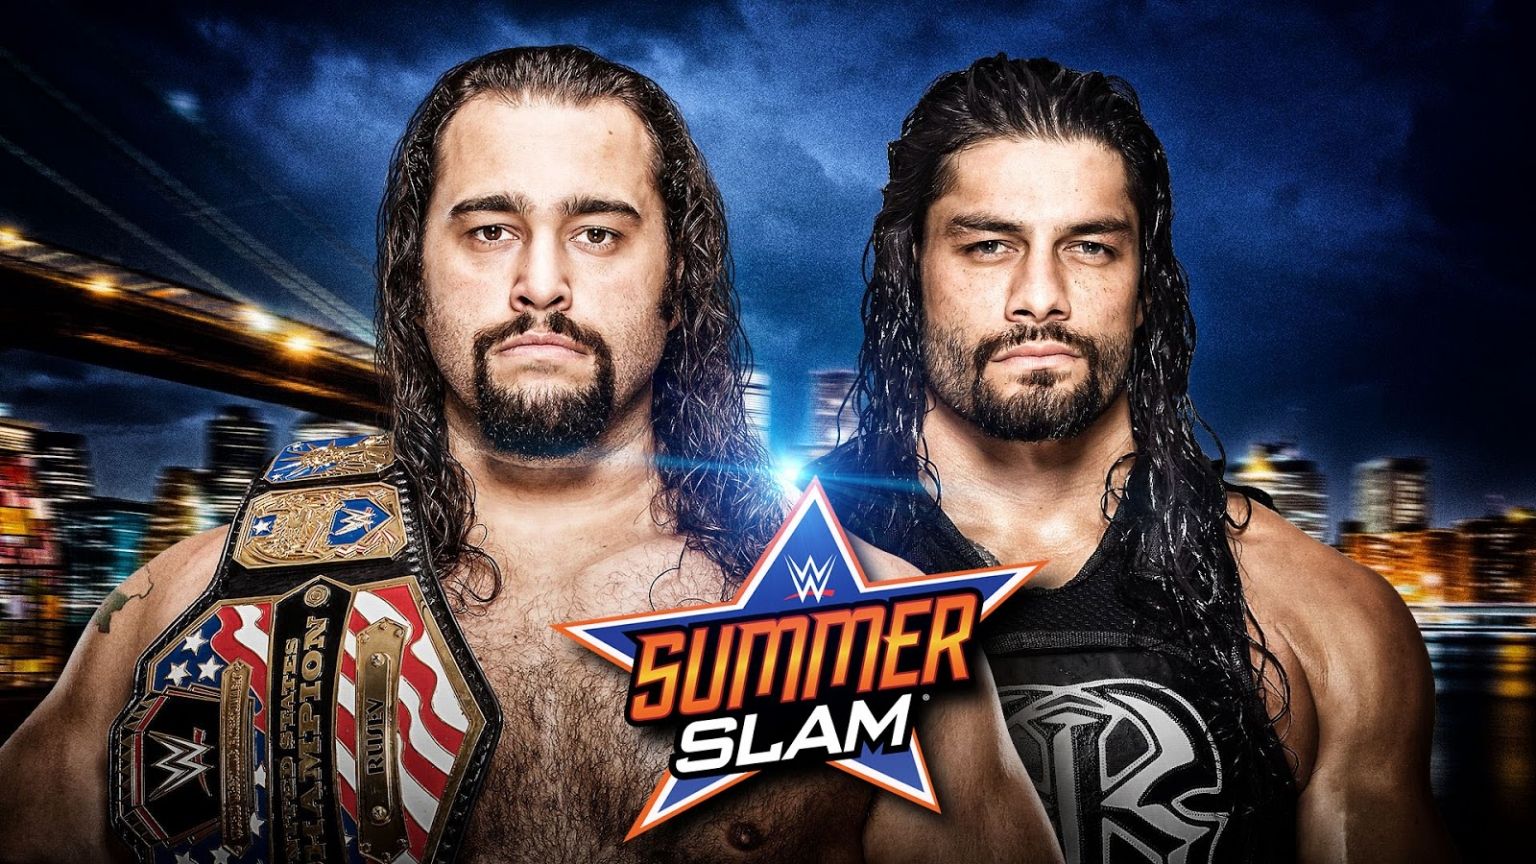 Free download WWE SummerSlam 2016 quotRusev vs Roman Reignsquot US